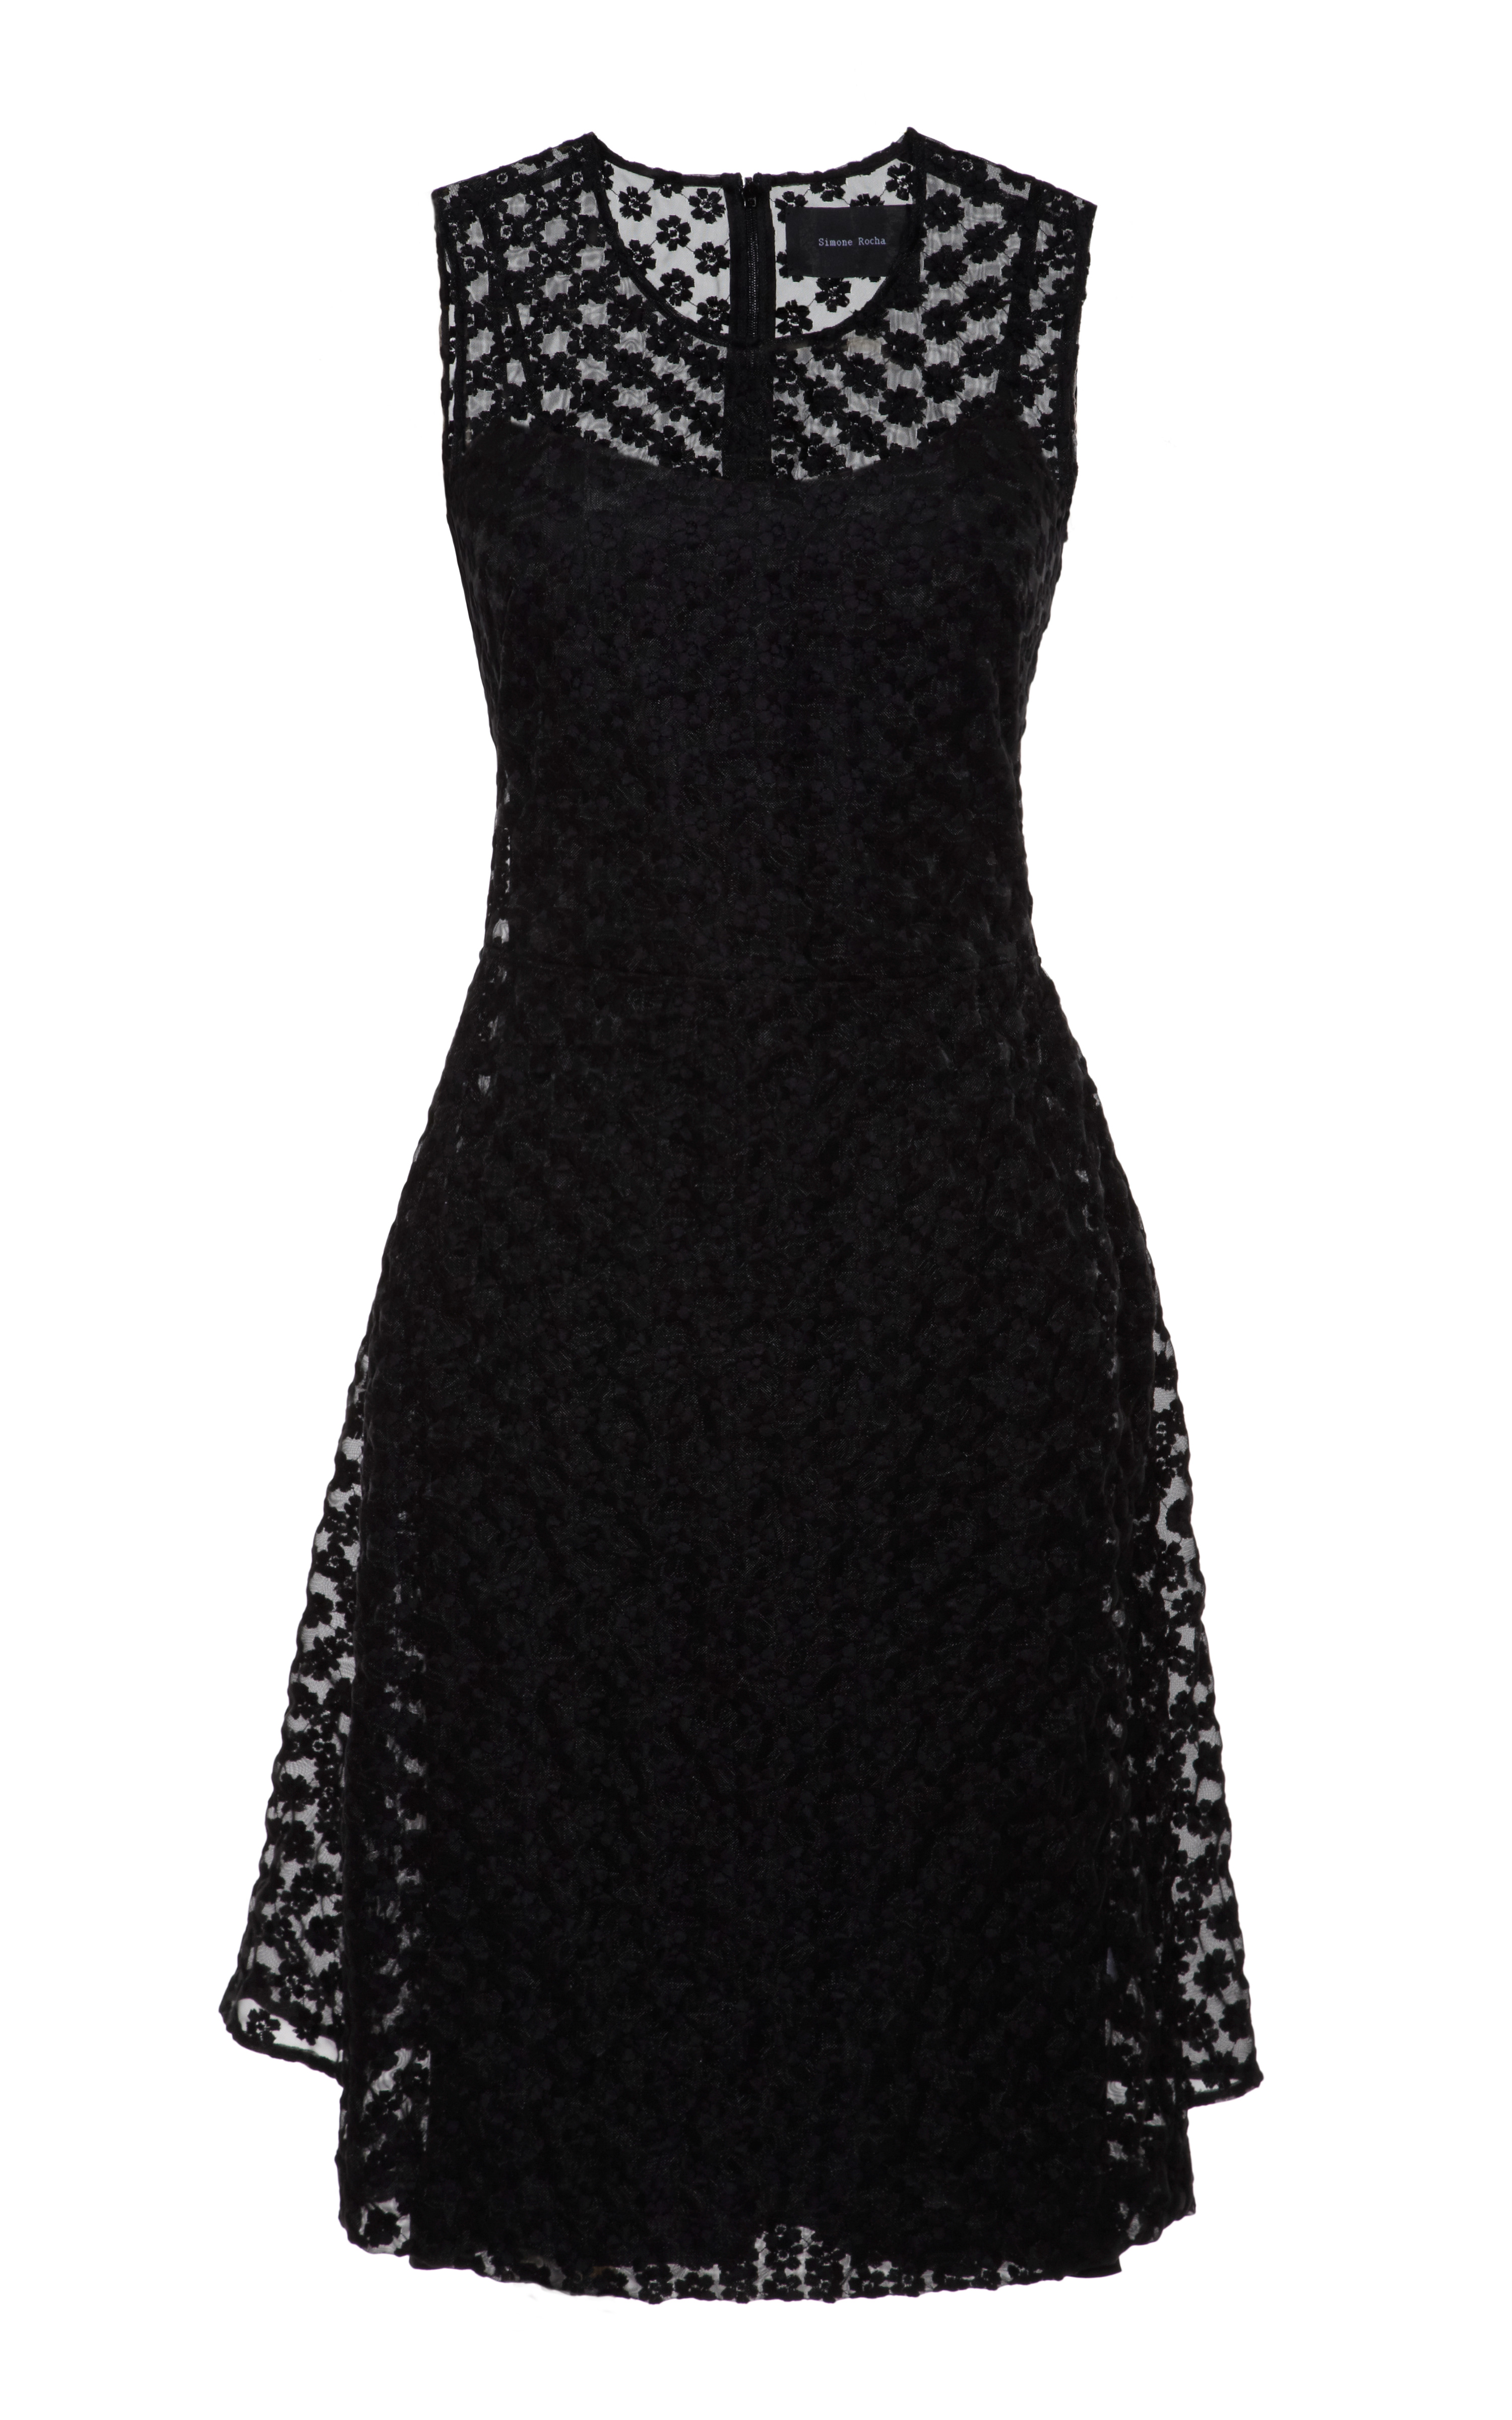 Lyst - Simone Rocha Embroidered Crinoline Dress in Black